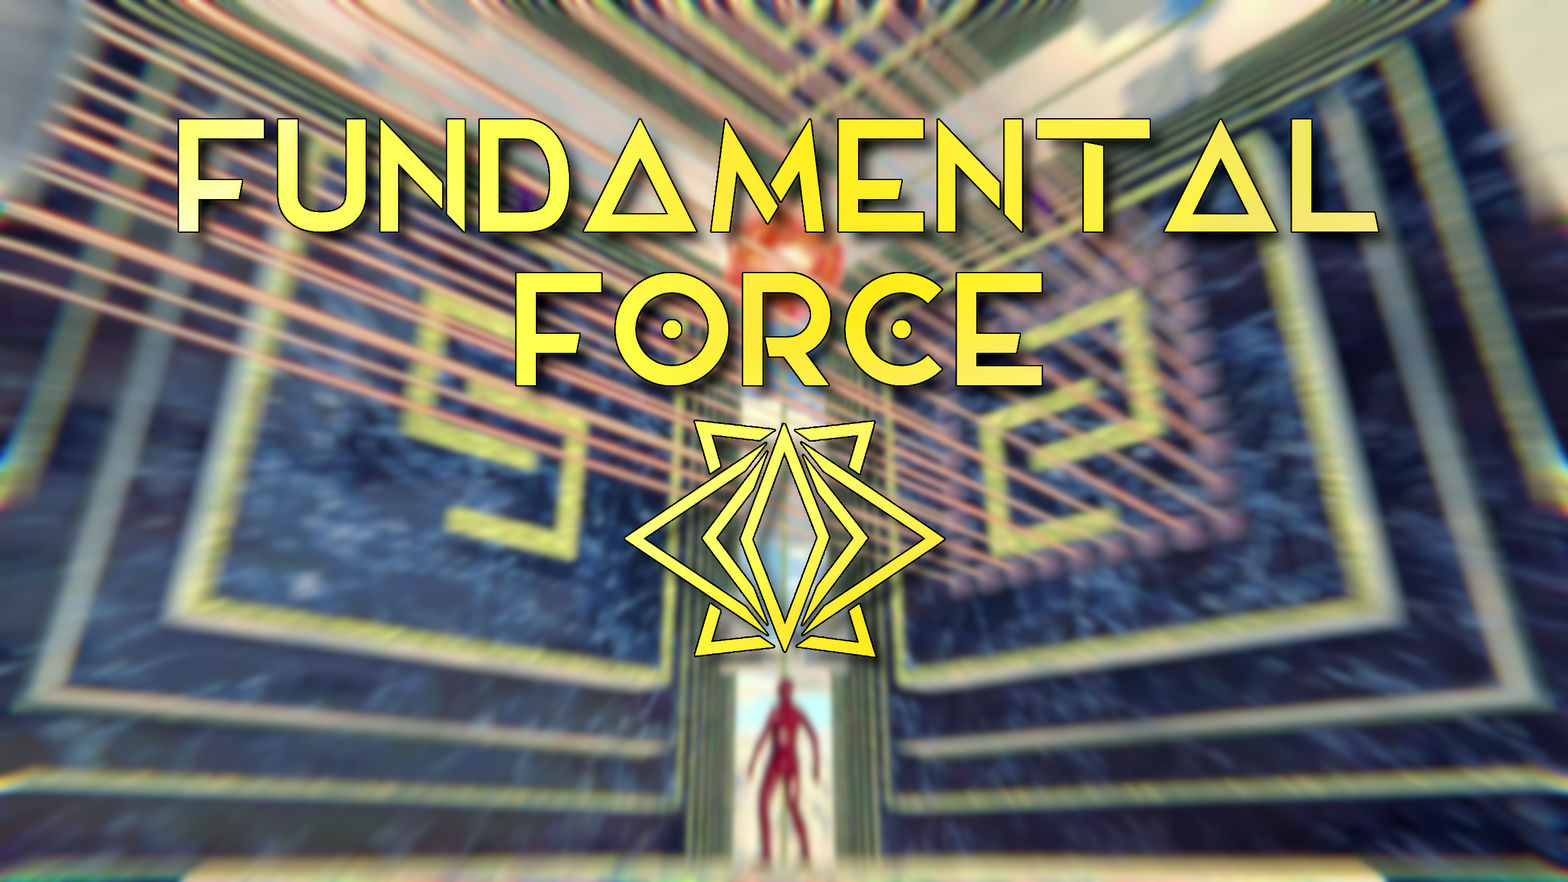 Fundamental Force